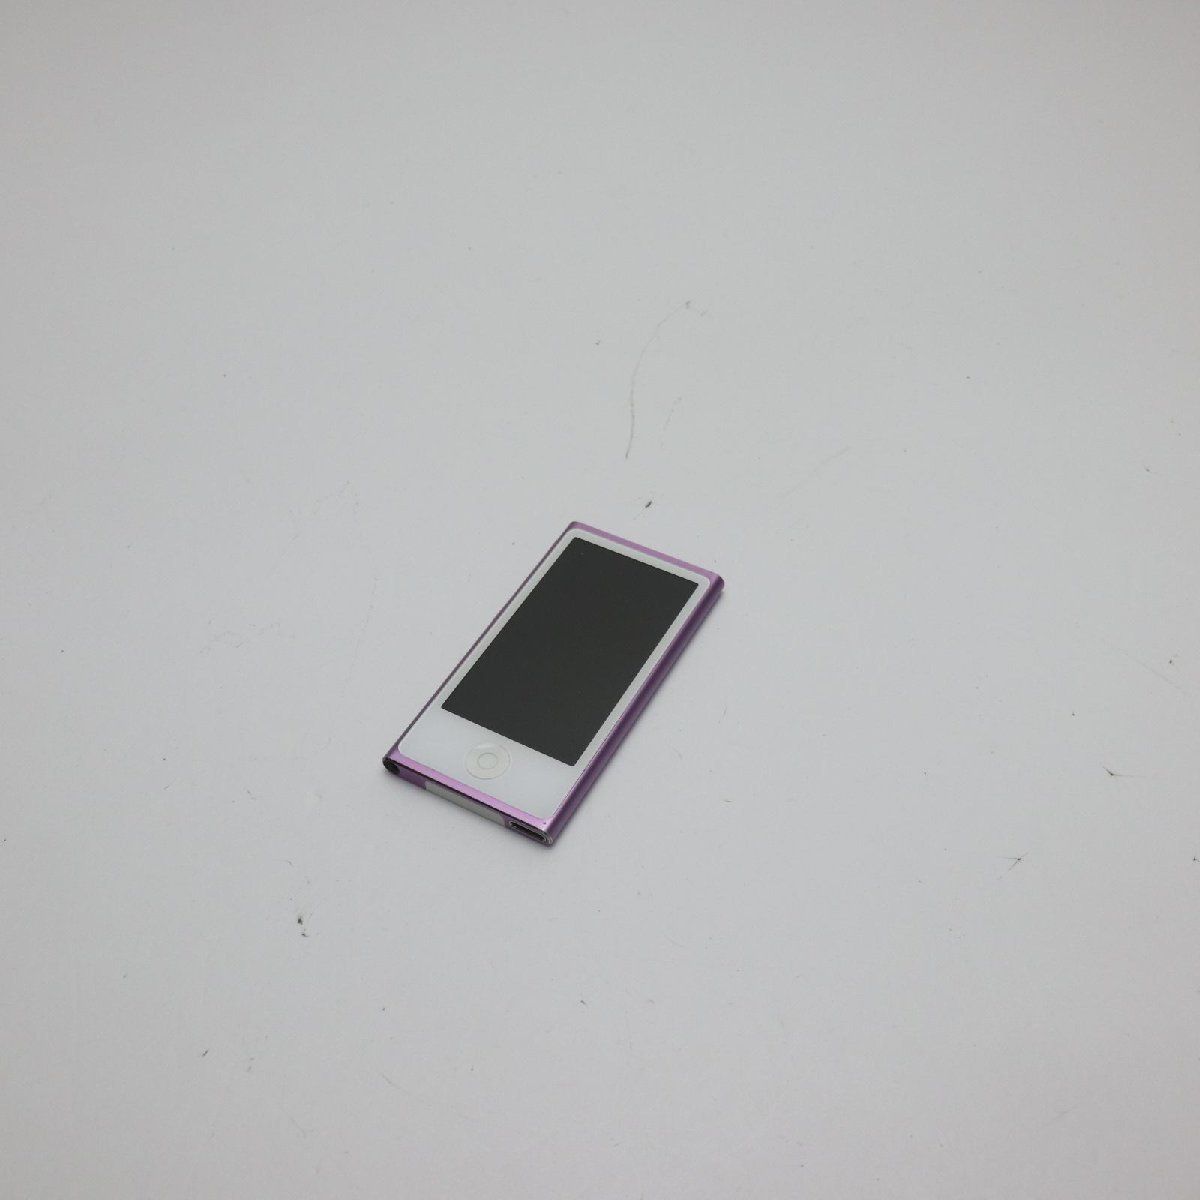 超美品 iPod nano 第7世代 16GB パープル 即日発送 MD479J/A MD479J/A